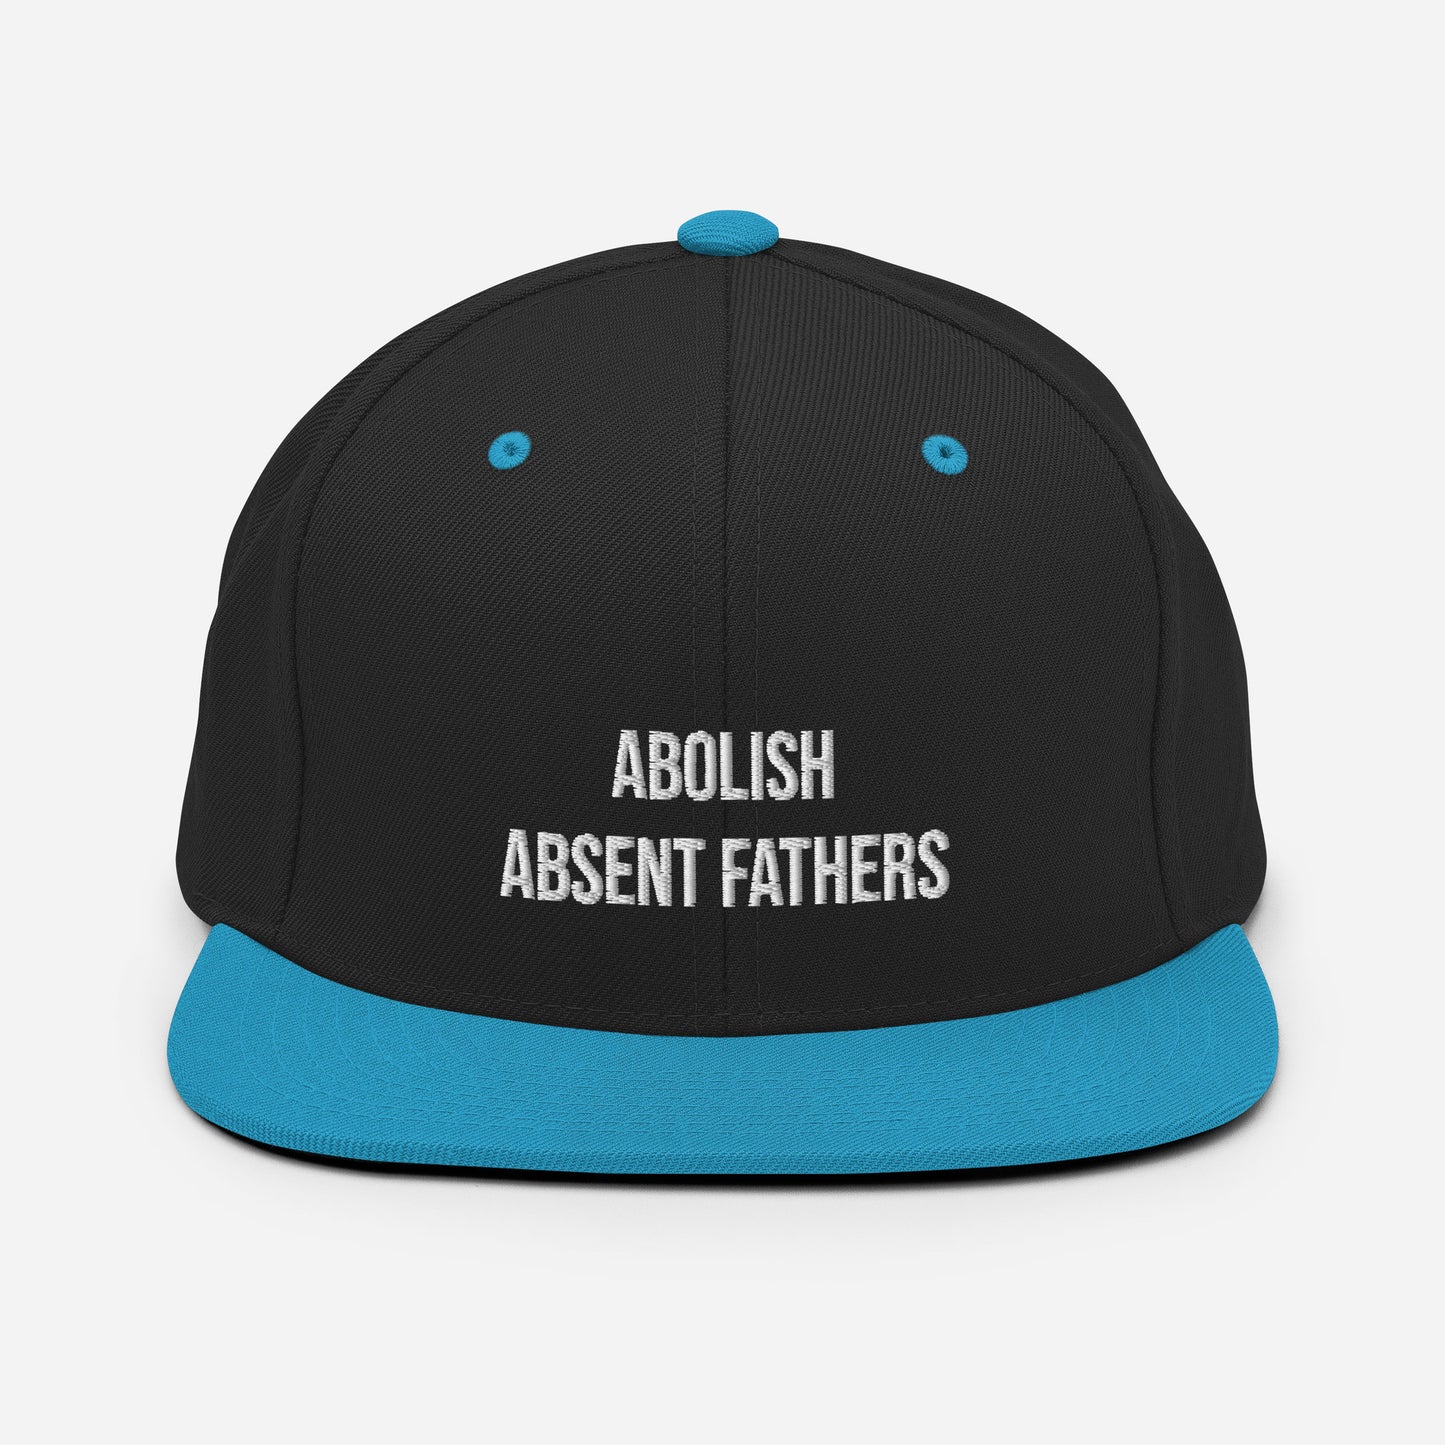 Abolish Absent Fathers Snapback Hat